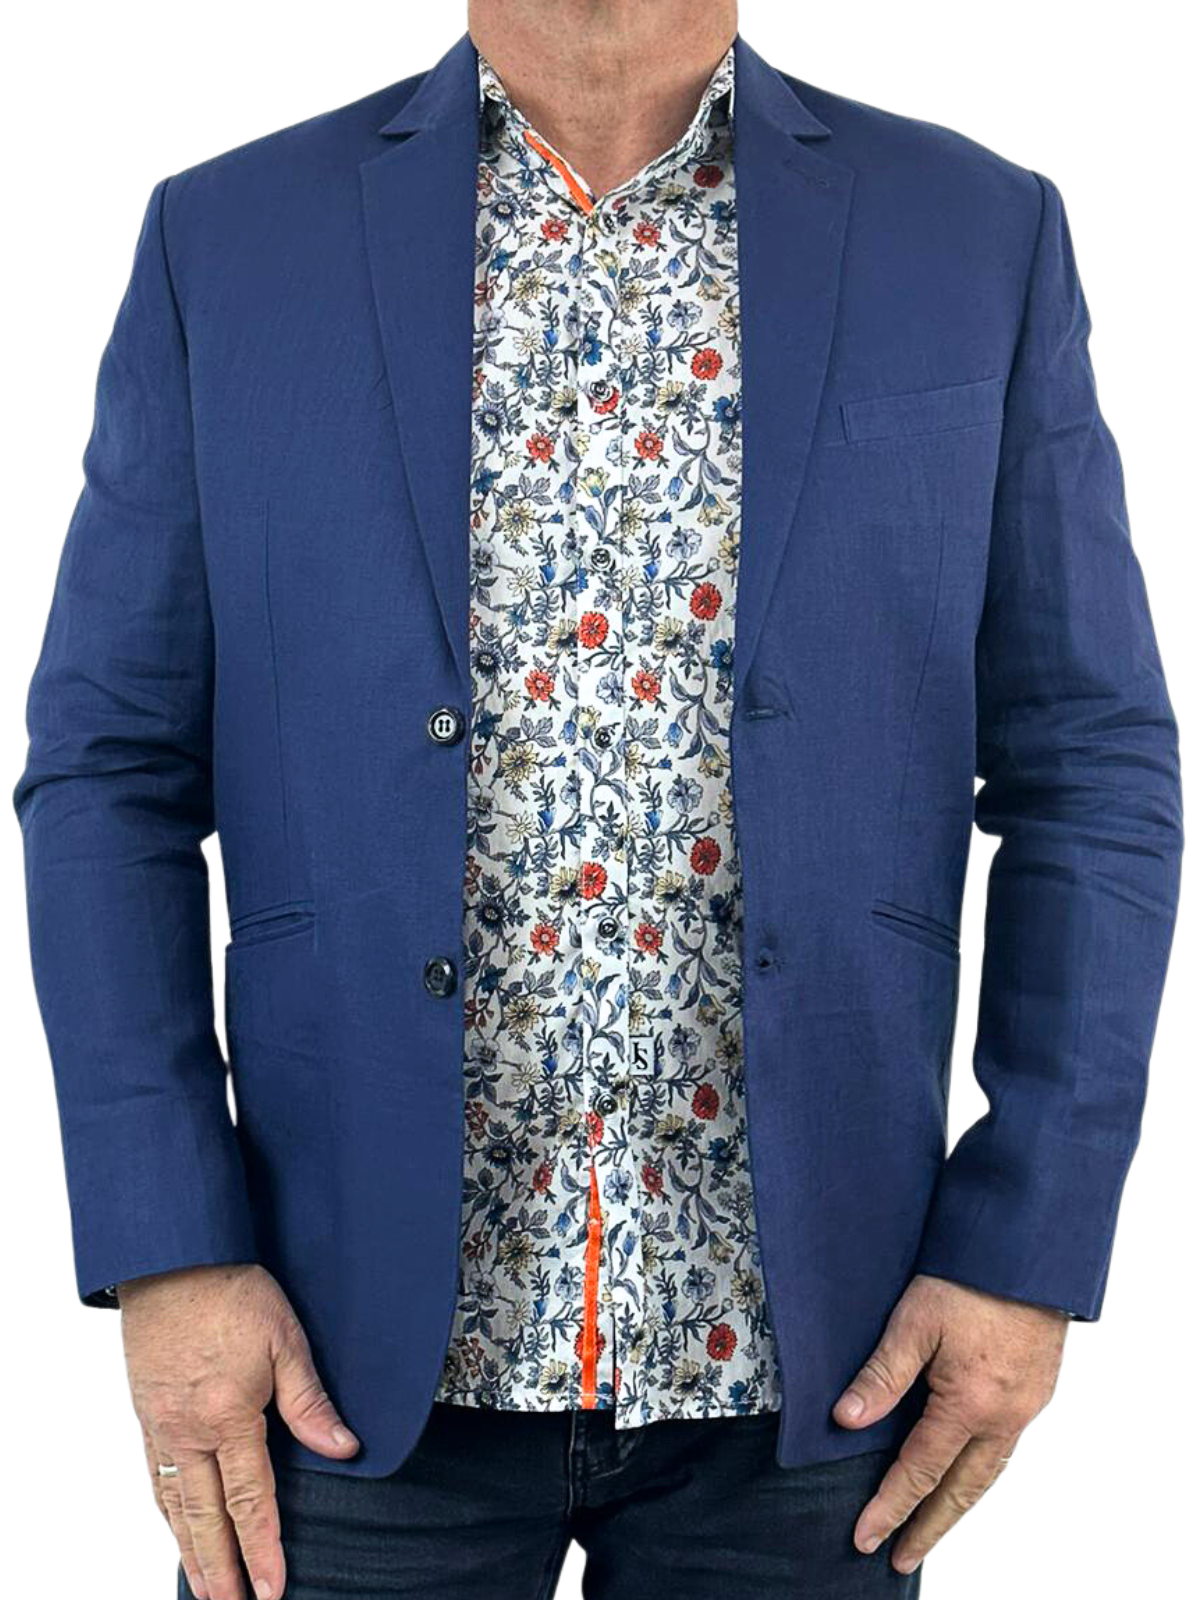 Tangle Floral Cotton L/S Shirt – Multi